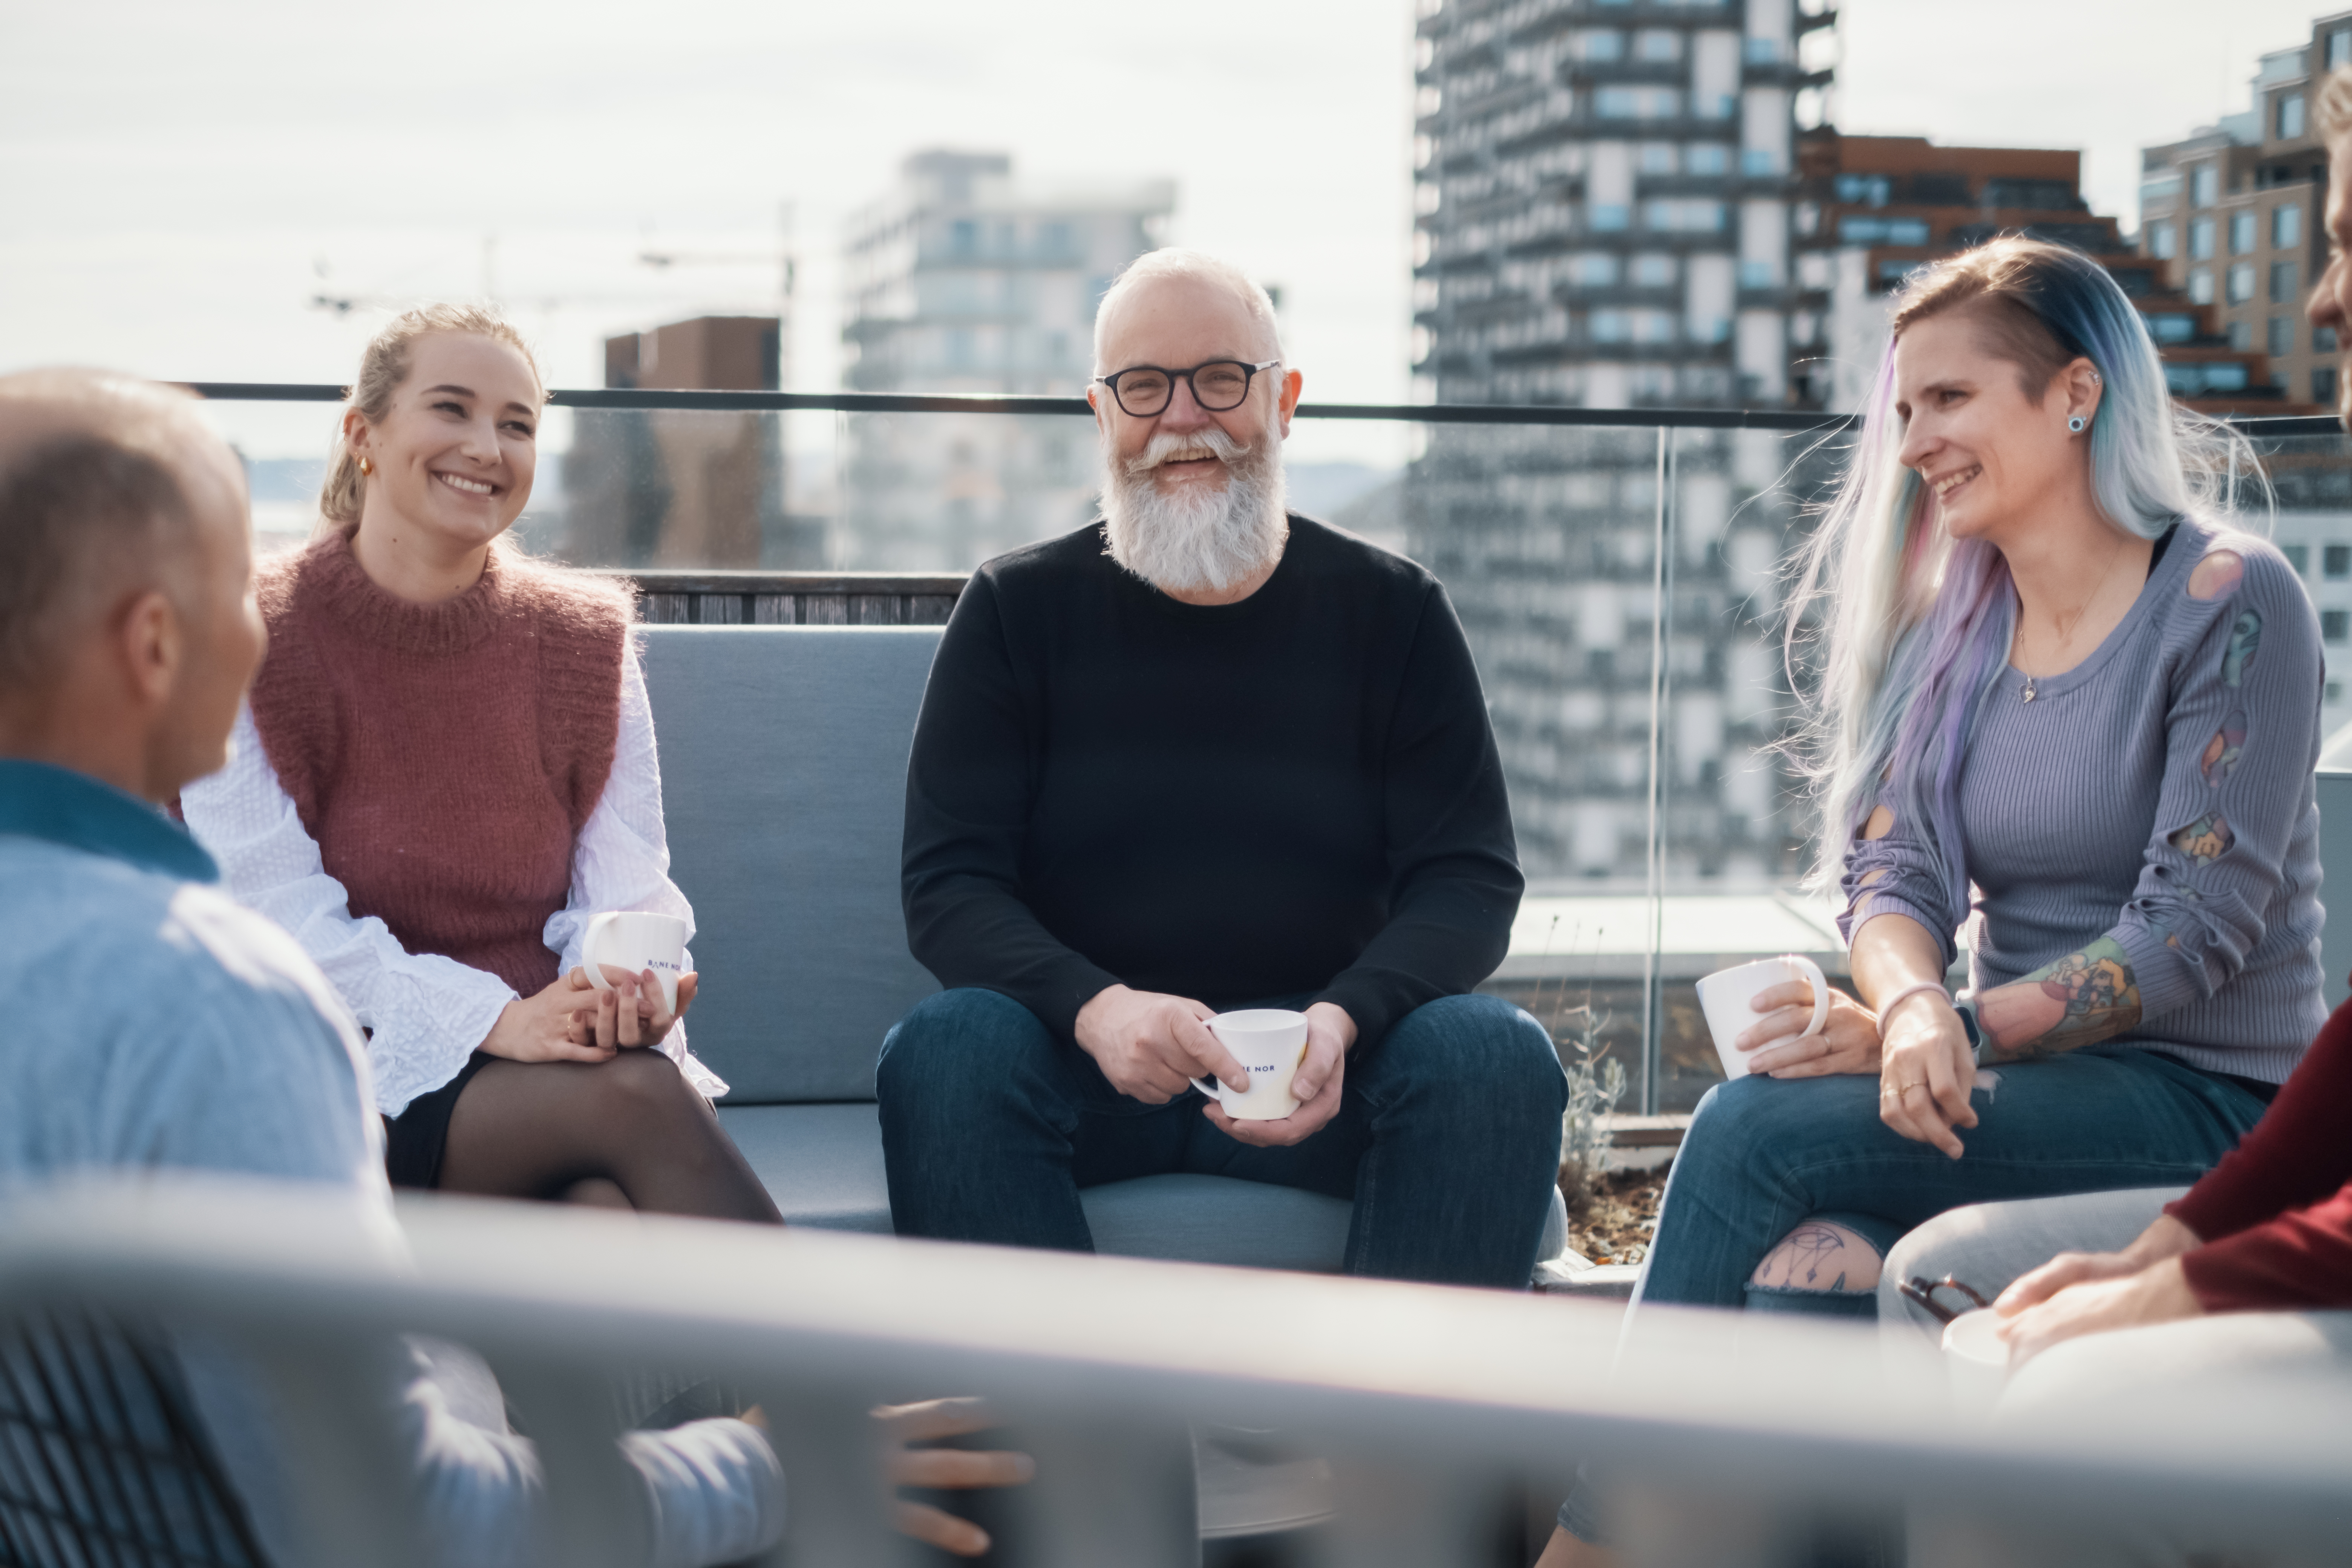 fire personer sitter på Bane NOR sin takterrasse på hovedkontoret i Oslo